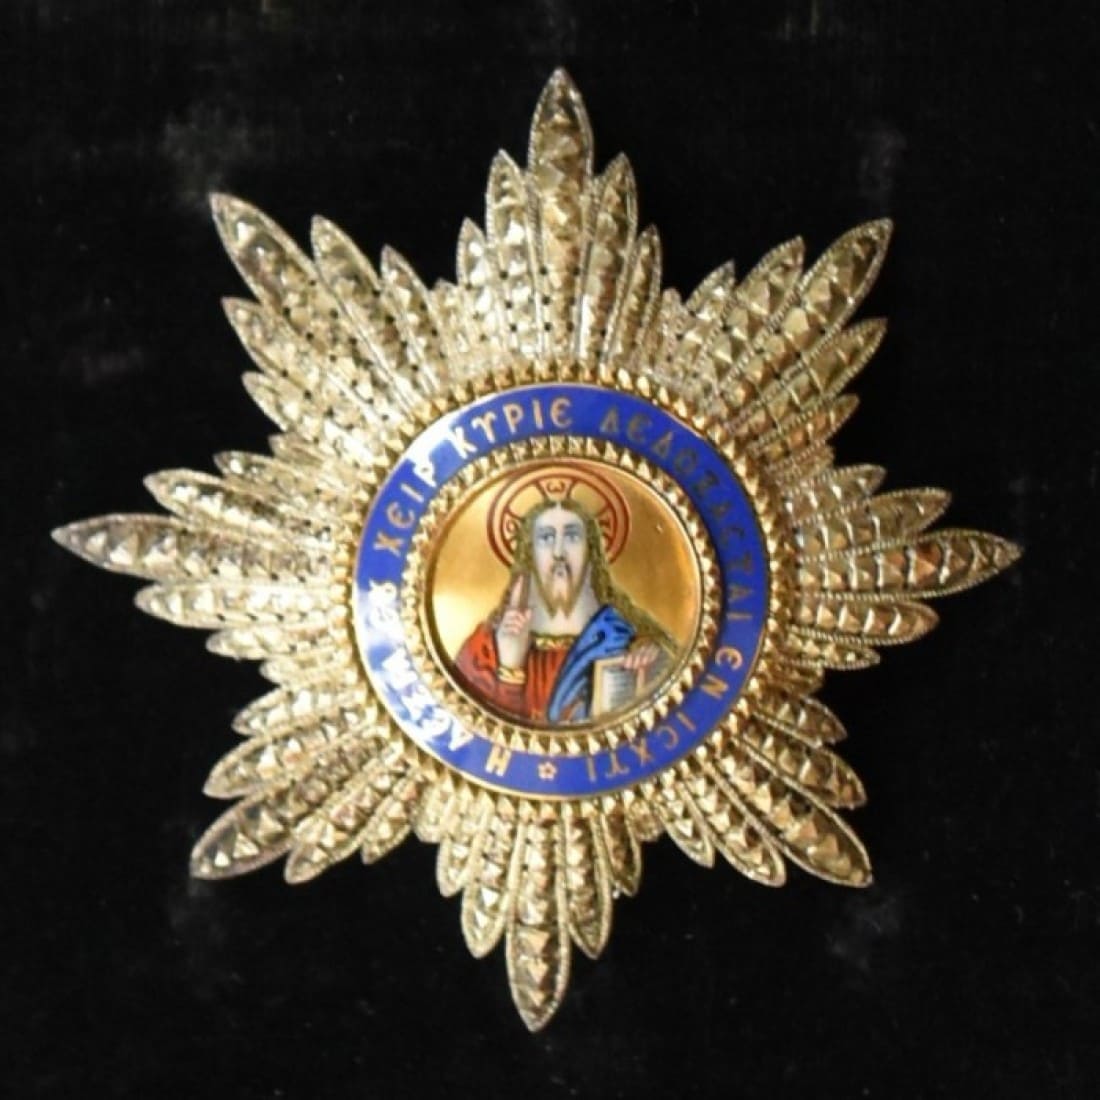 2nd class Order of the Redeemer  made by Lemaitre, Paris.jpg